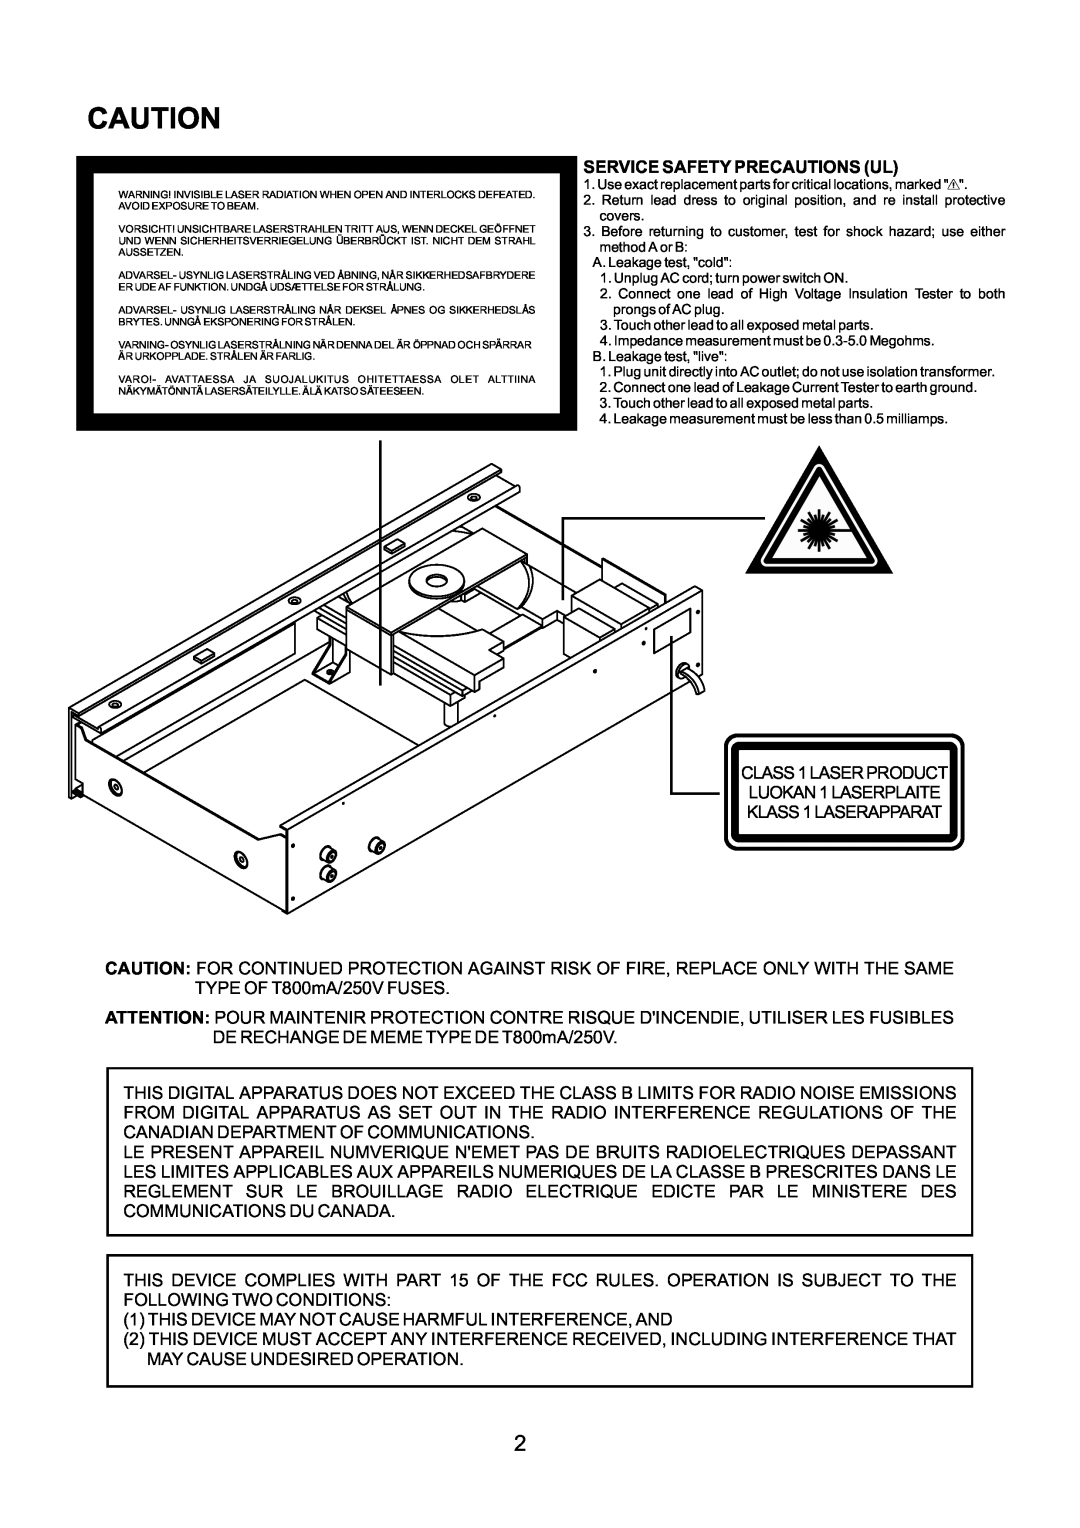 AMC CD8b manual Service Safety Precautions Ul 